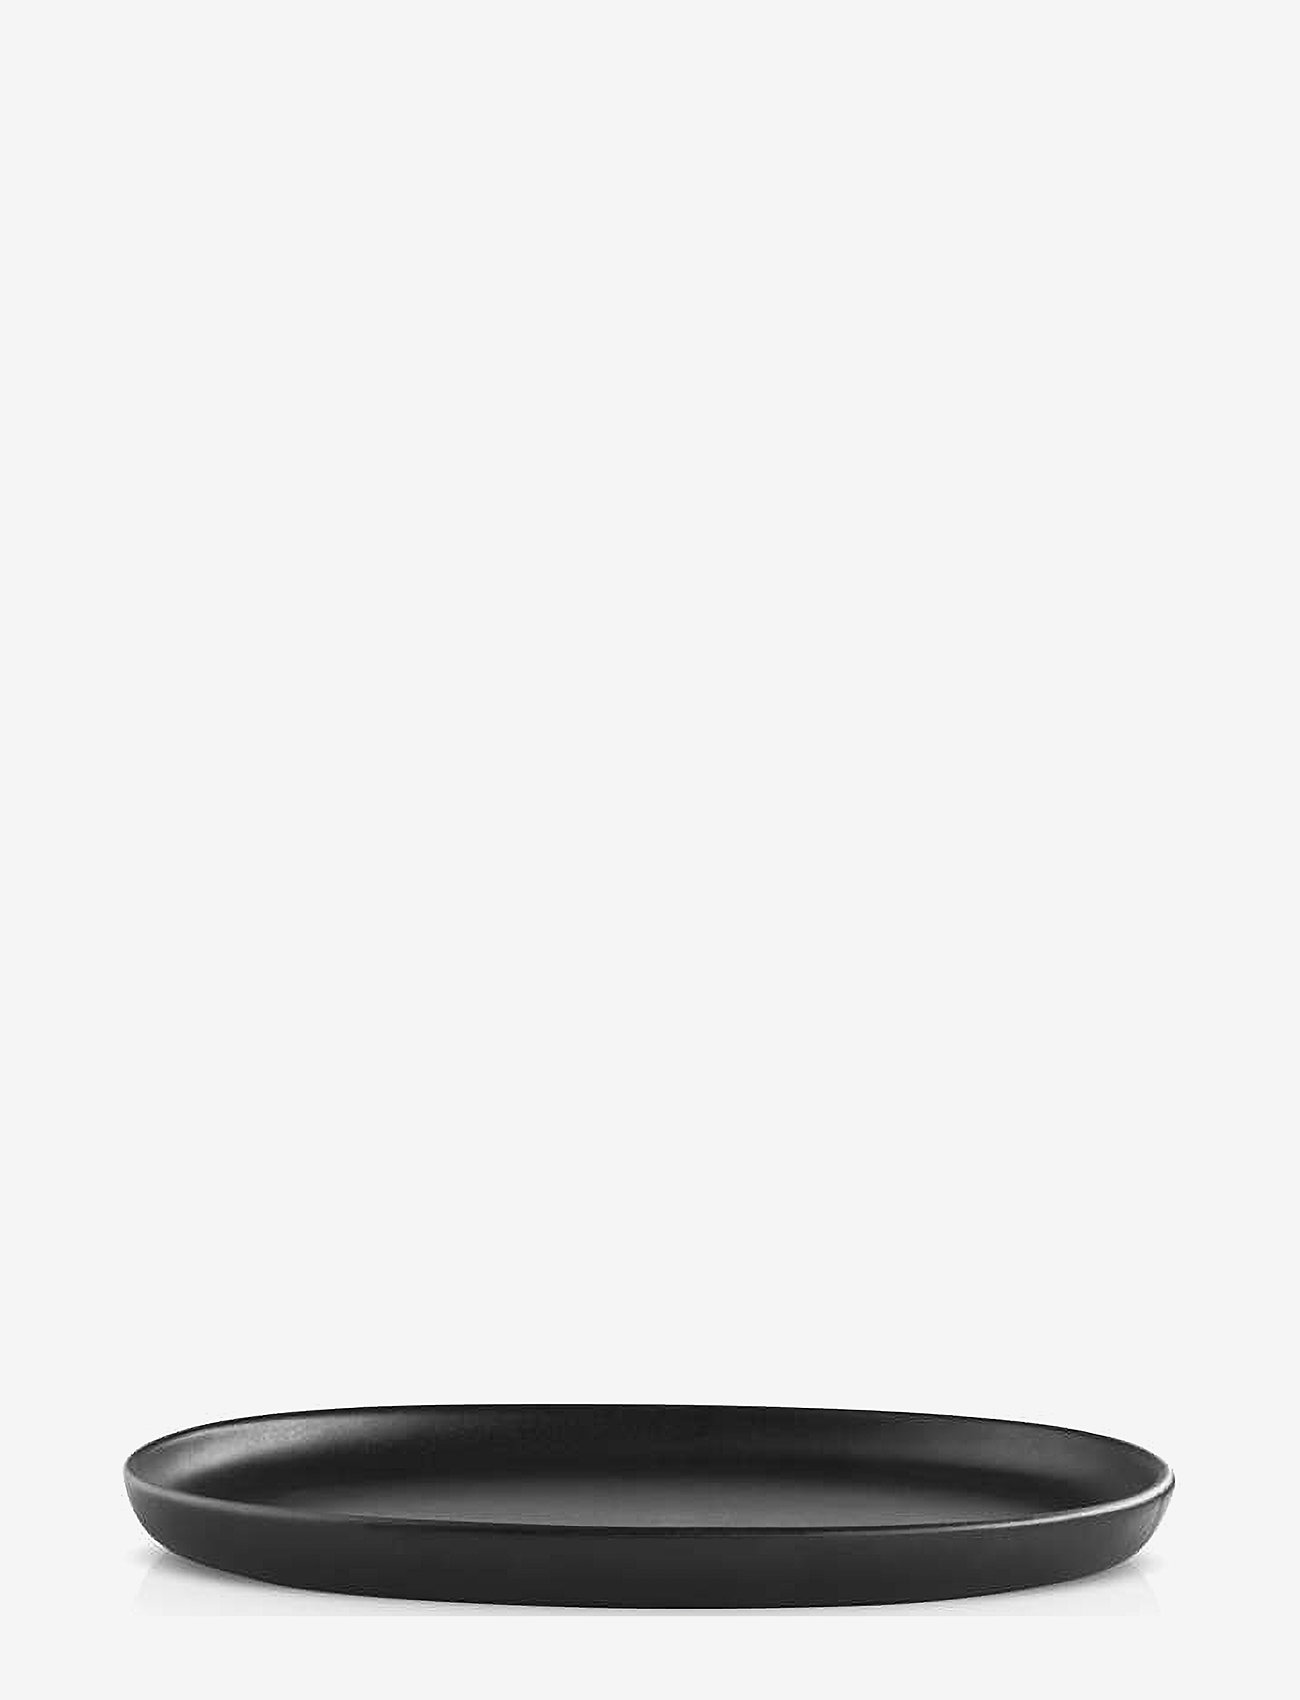 Eva Solo - Nordic kitchen oval plate 26 cm - lowest prices - black - 1